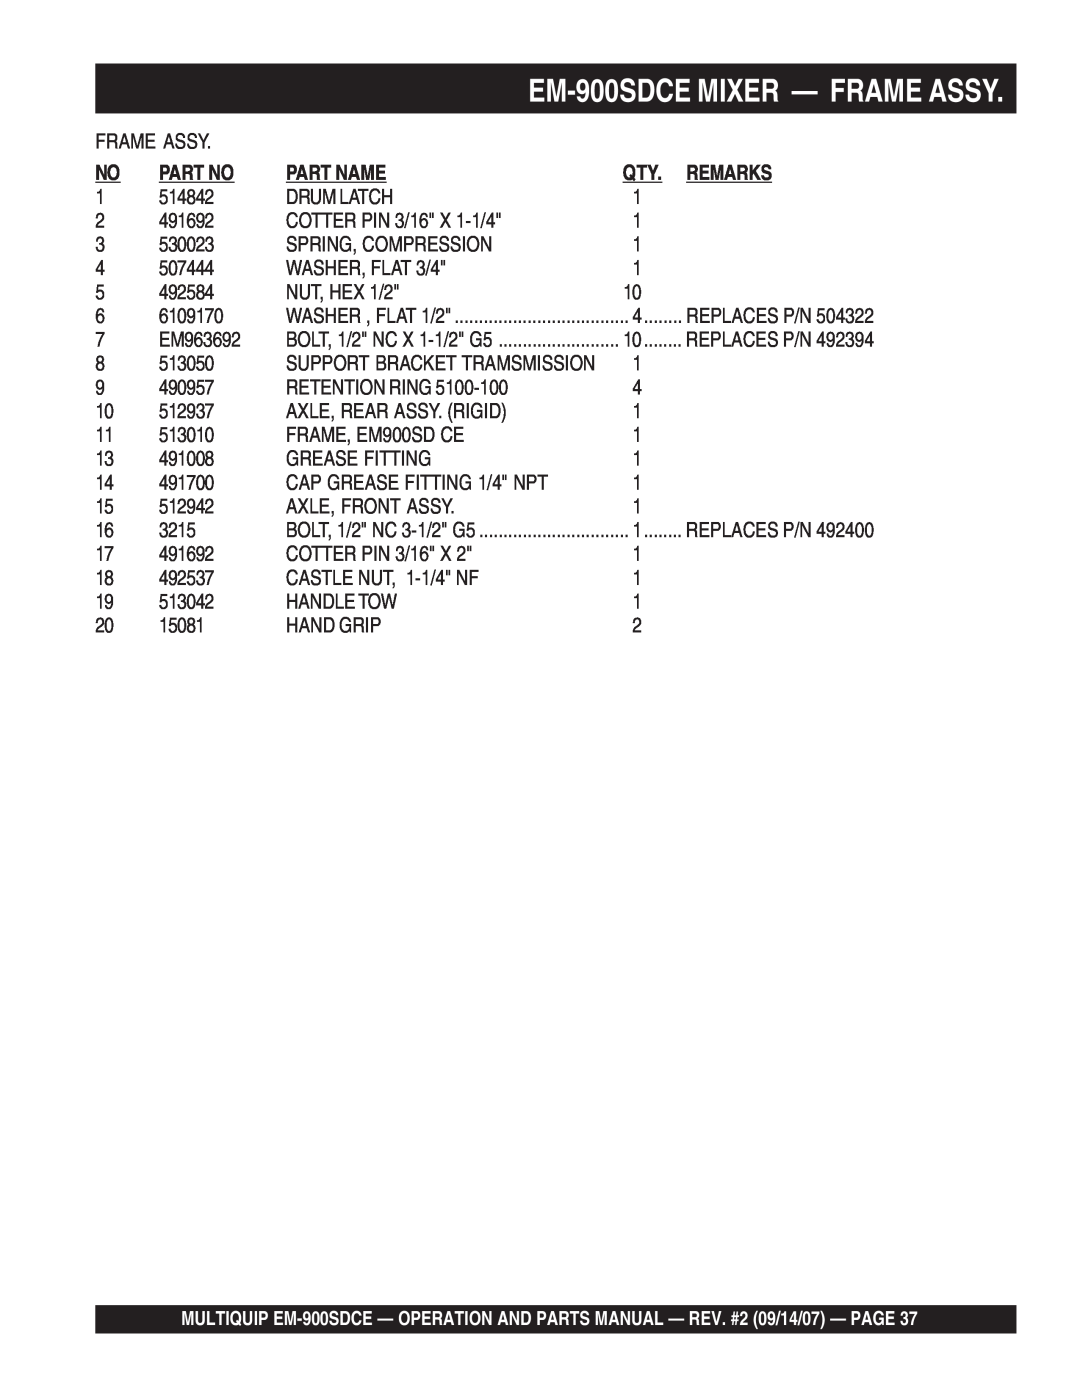 Multiquip manual EM-900SDCEMIXER — FRAME ASSY, Frame Assy, Part No, Part Name, Remarks 